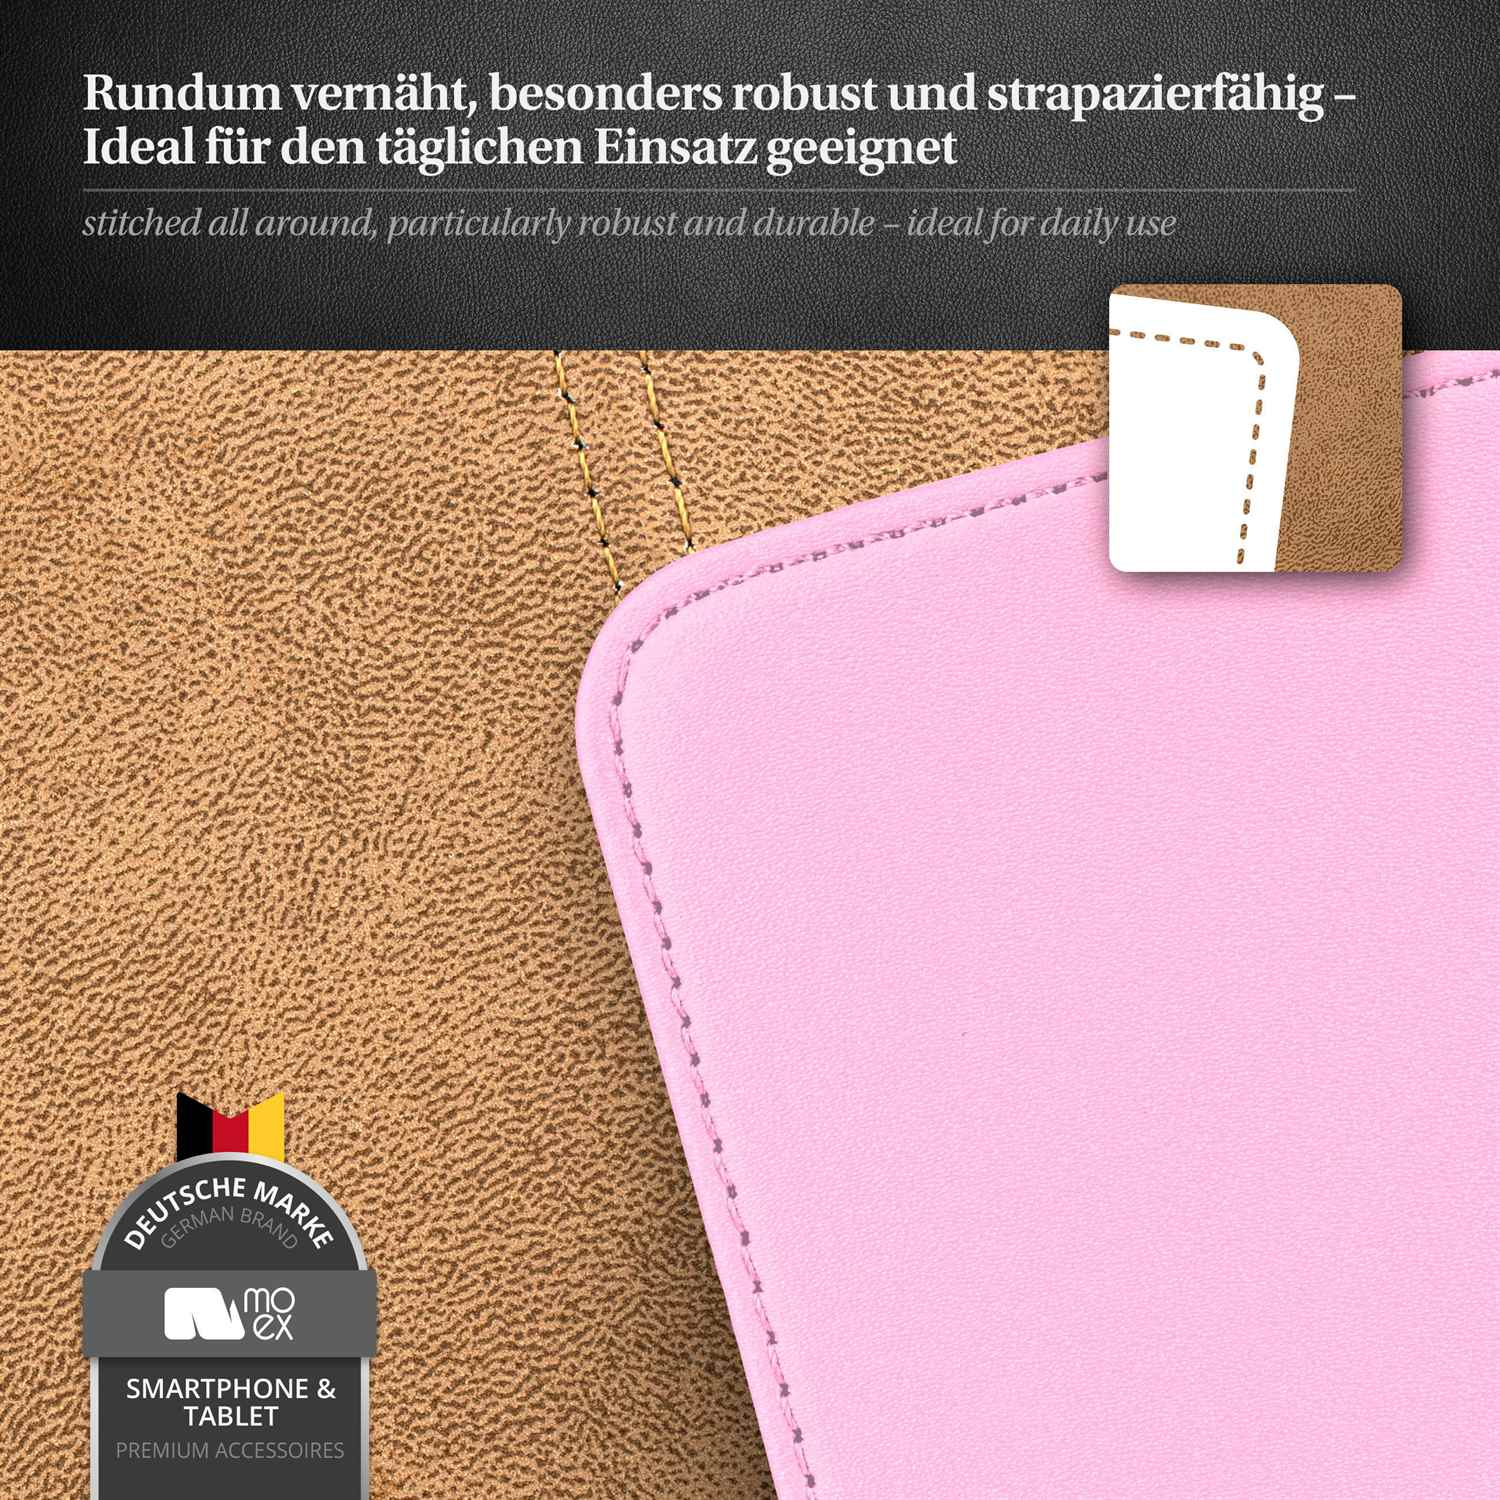 Flip Samsung, Galaxy Case, S2, MOEX Icy-Pink Flip Cover,